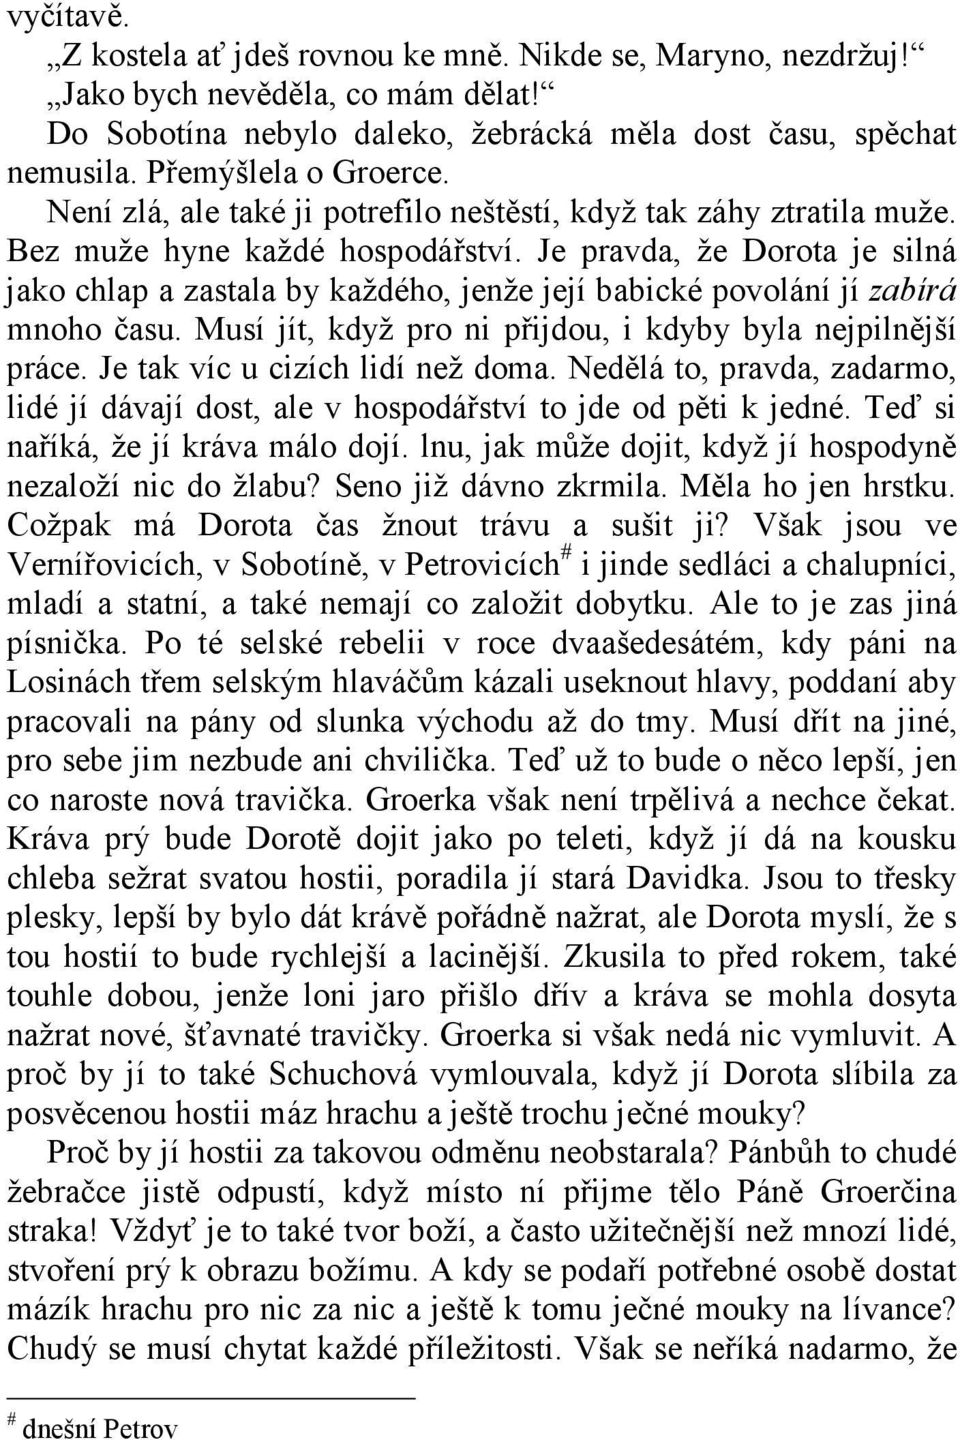 Václav Kaplický. Kladivo na čarodějnice - PDF Stažení zdarma